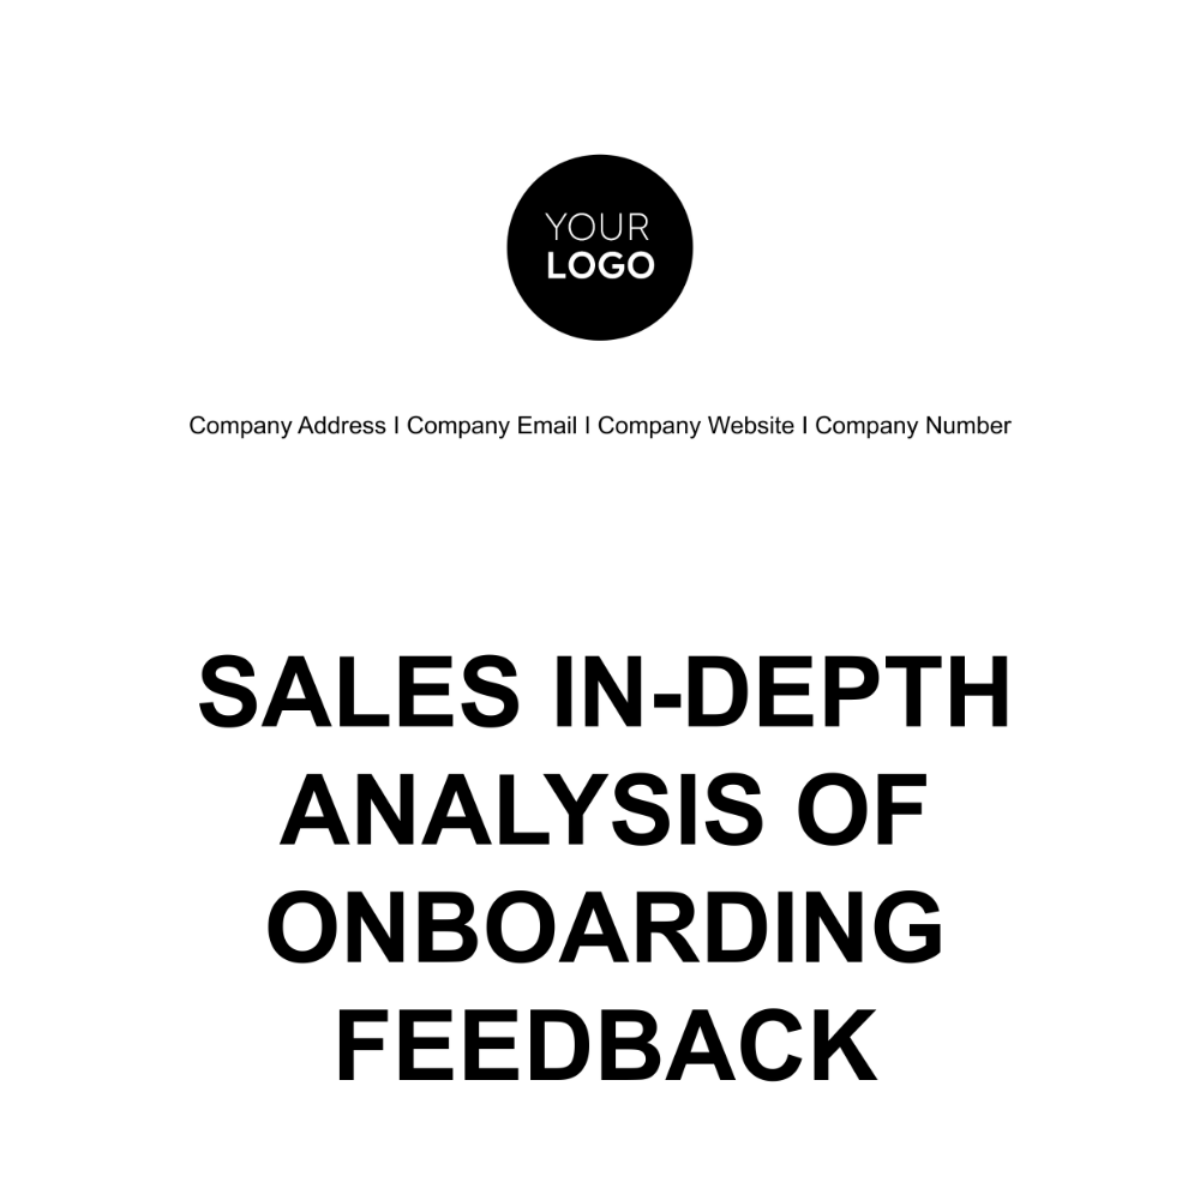 Sales In-depth Analysis of Onboarding Feedback Template